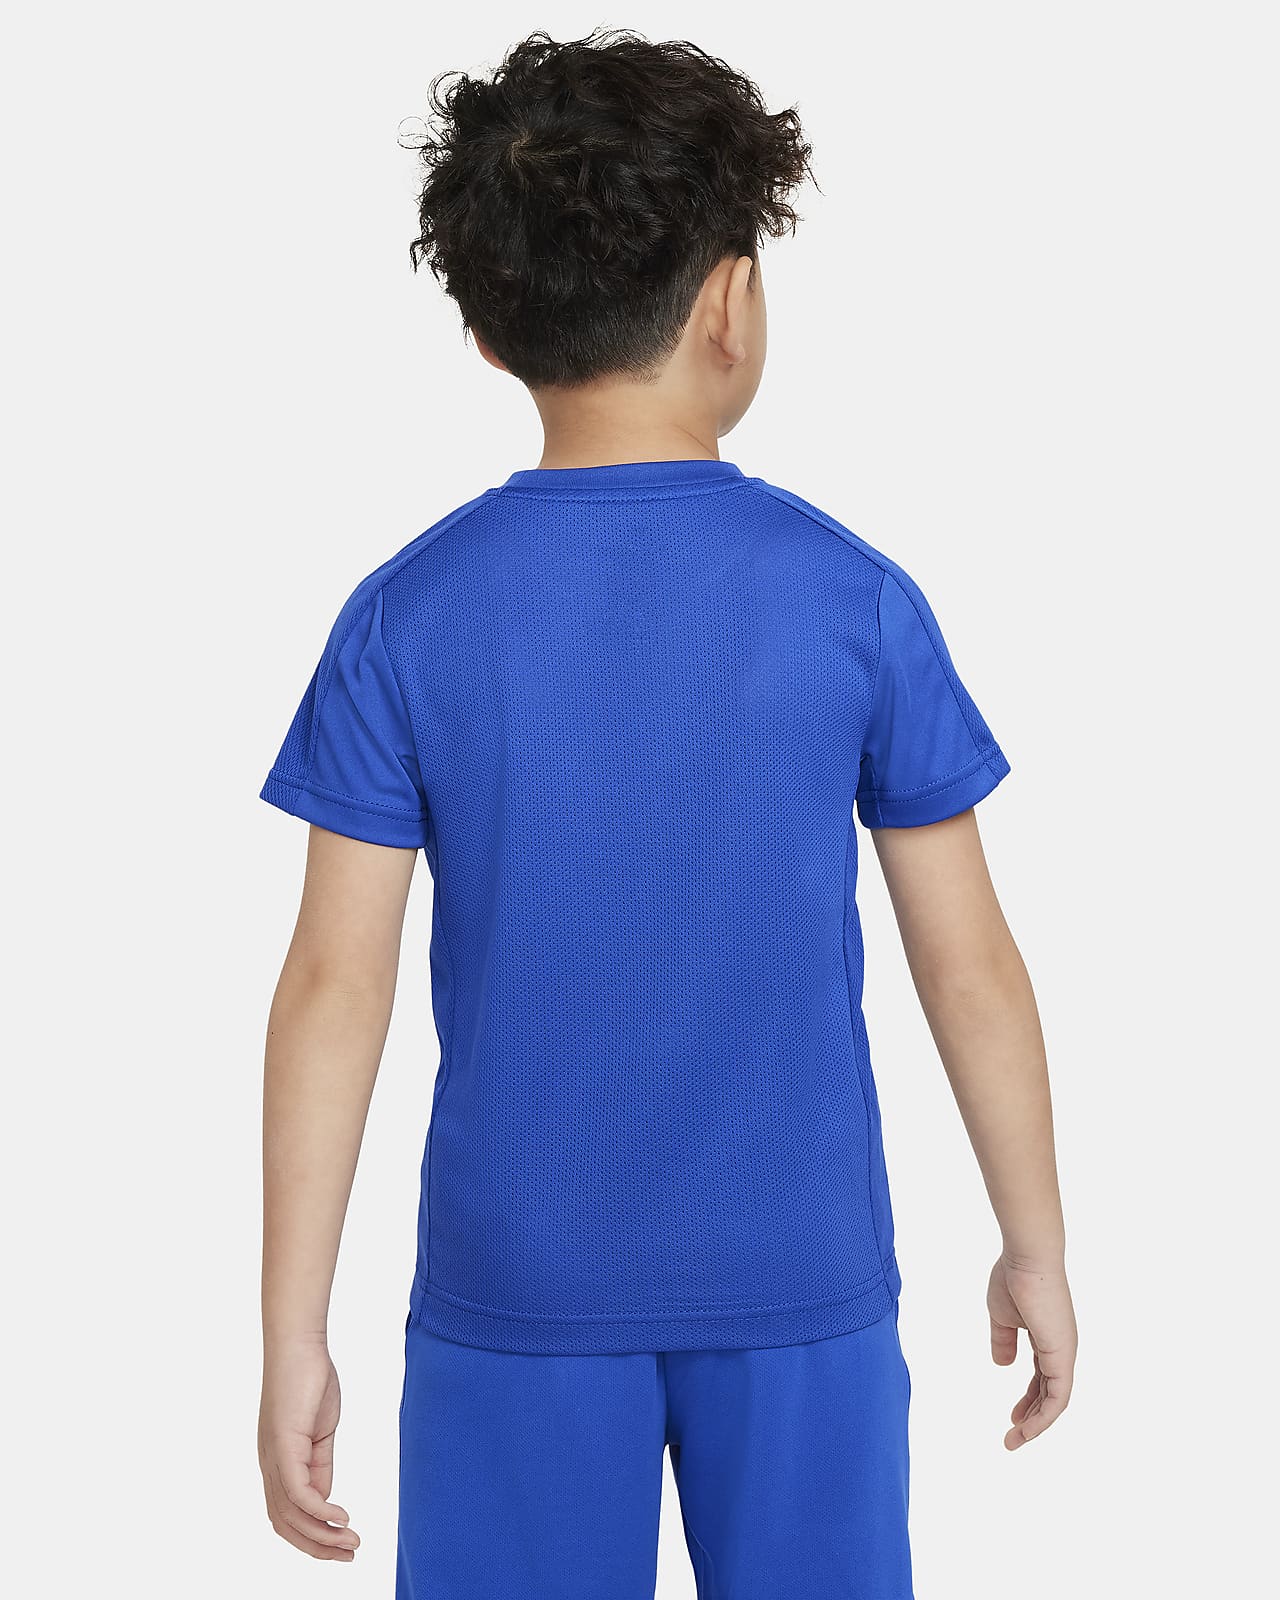 Little Sleeve Dri-FIT Top. Short Academy Kids\' Nike